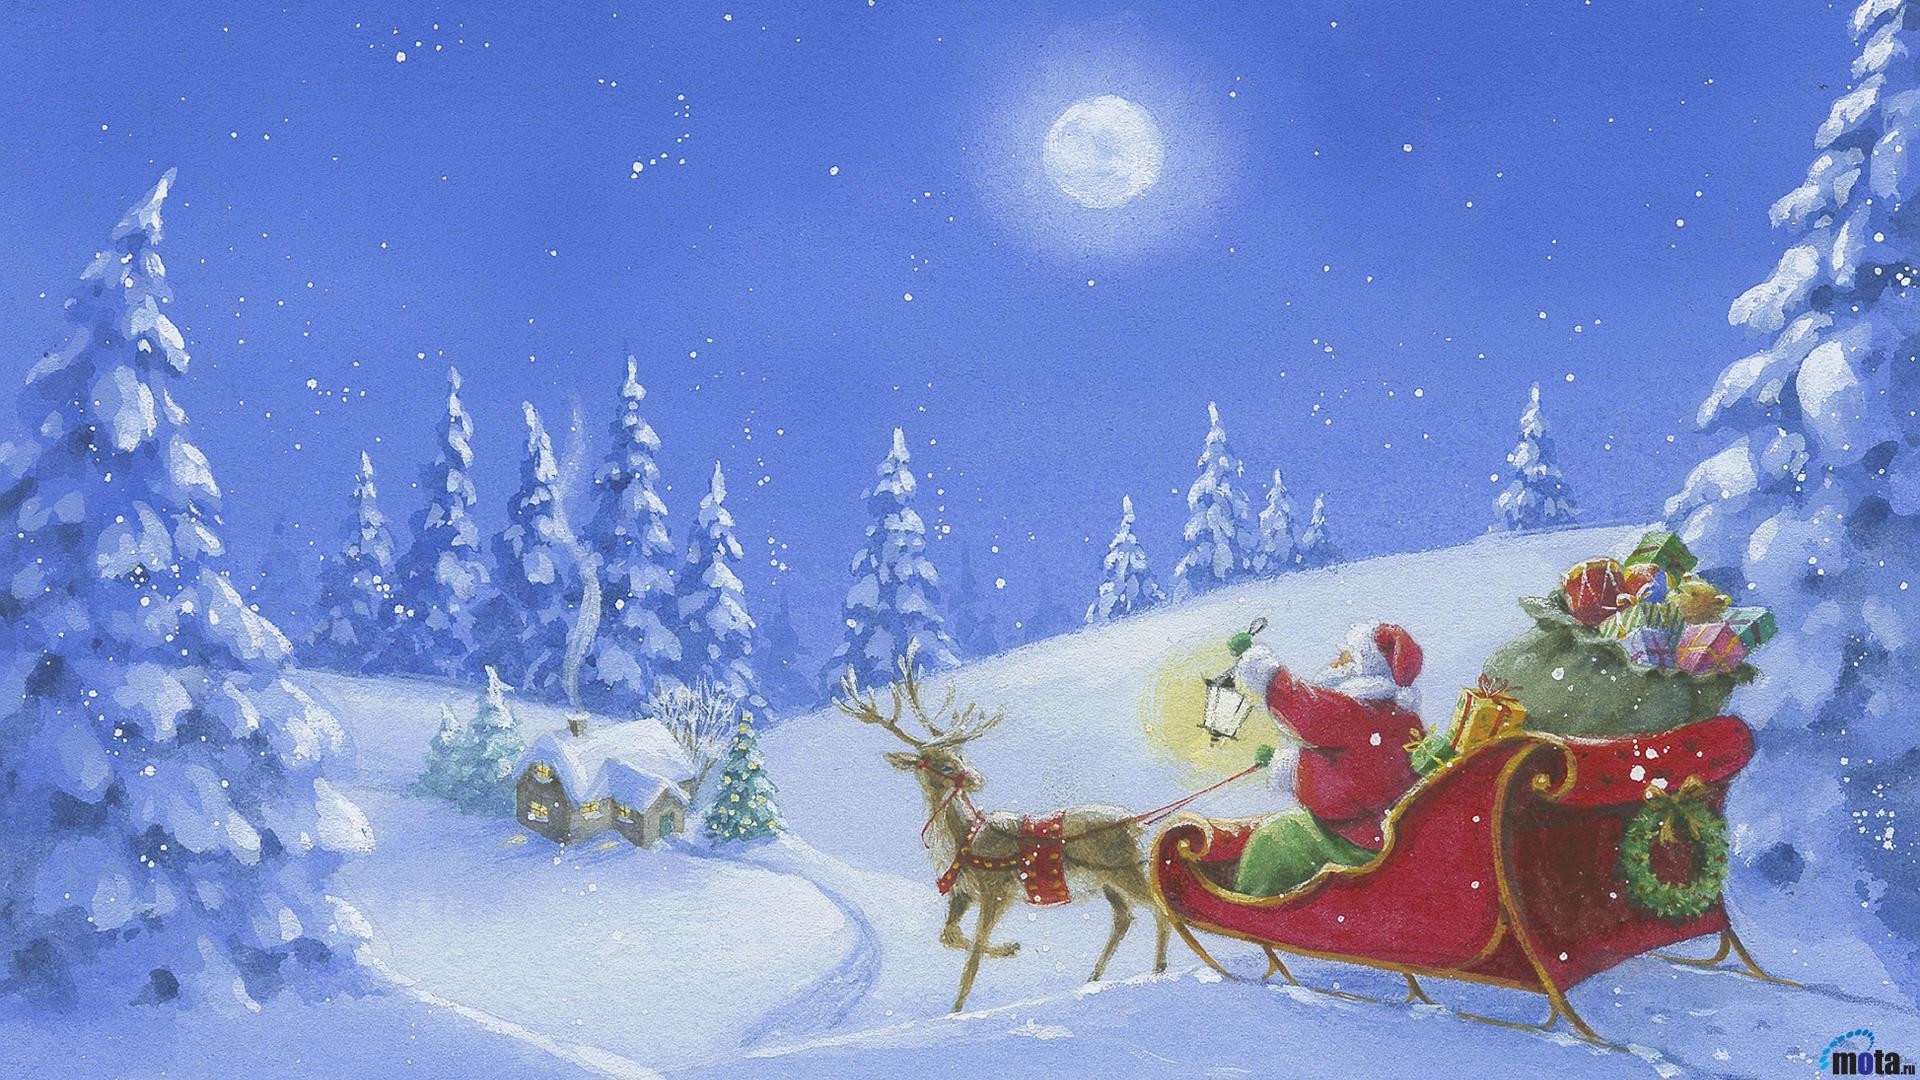 1920x1080 Santa Claus And Reindeer Wallpaper (15)